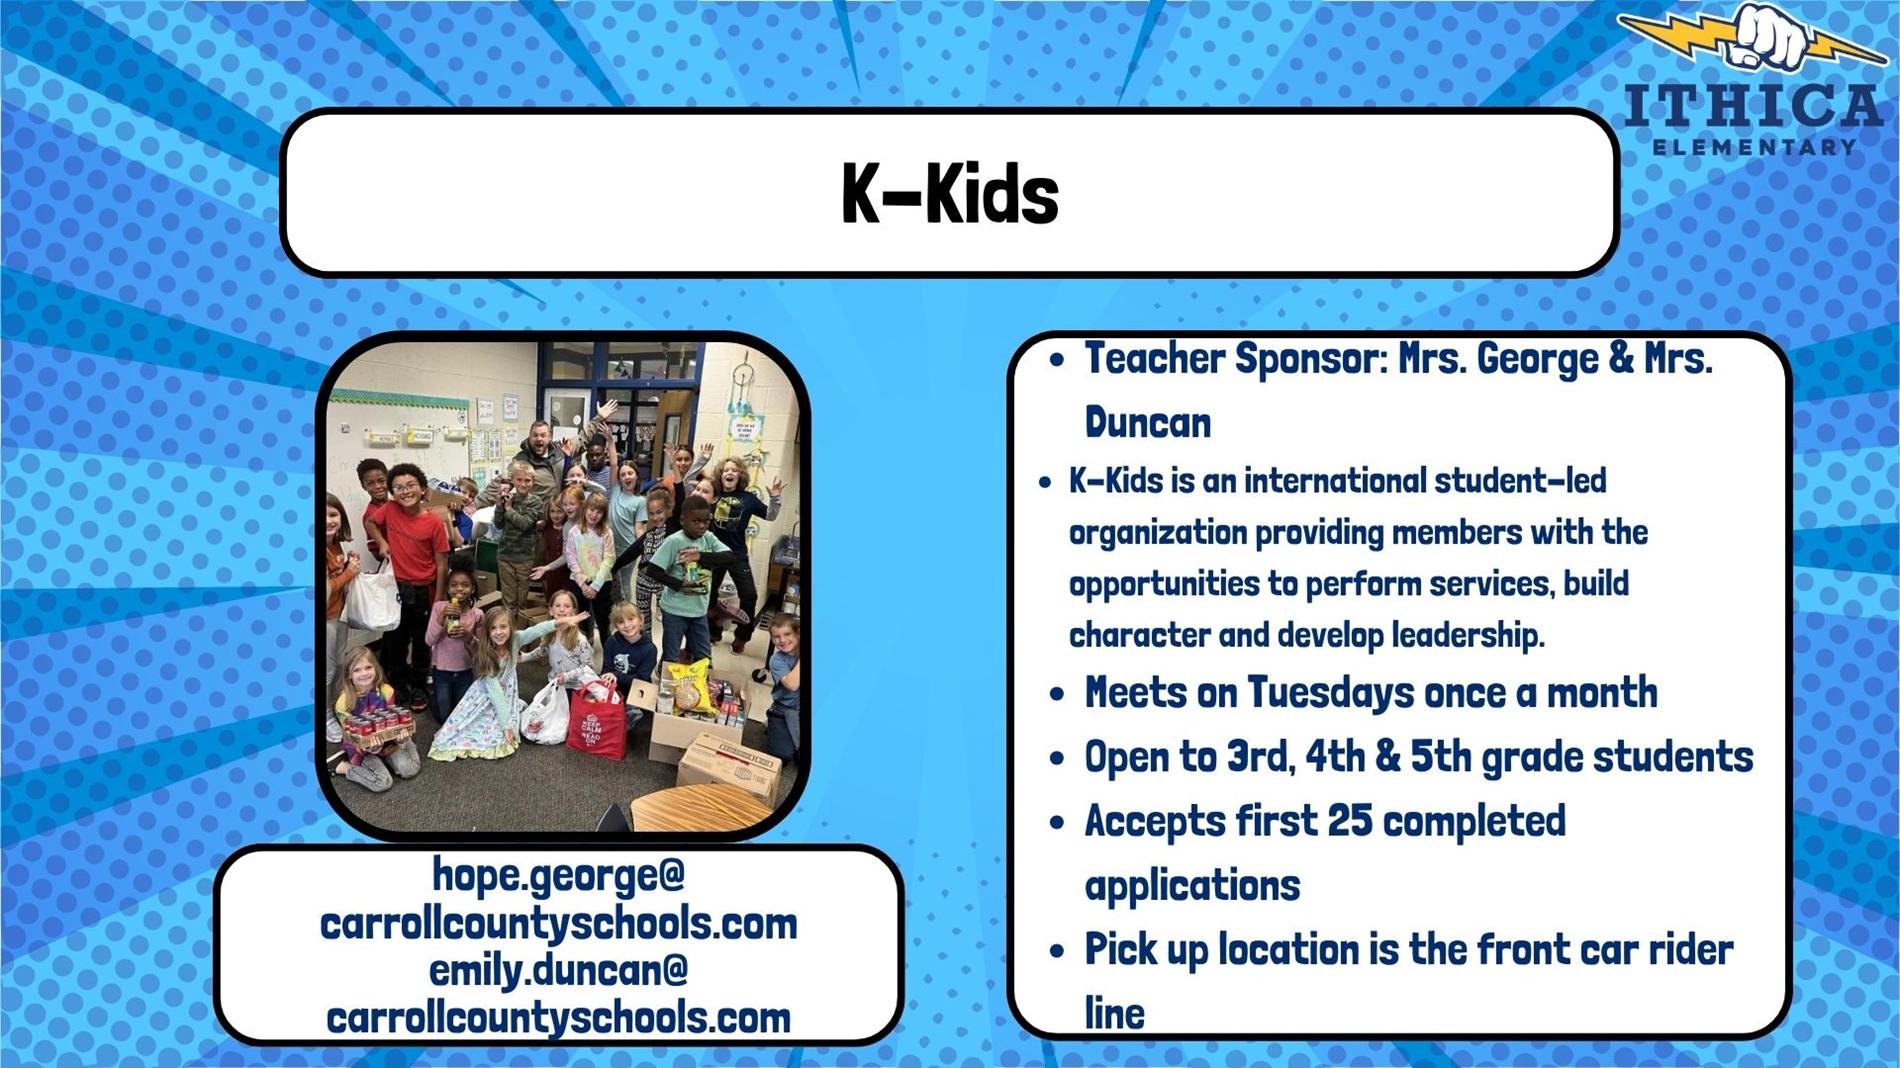 information about K-kids